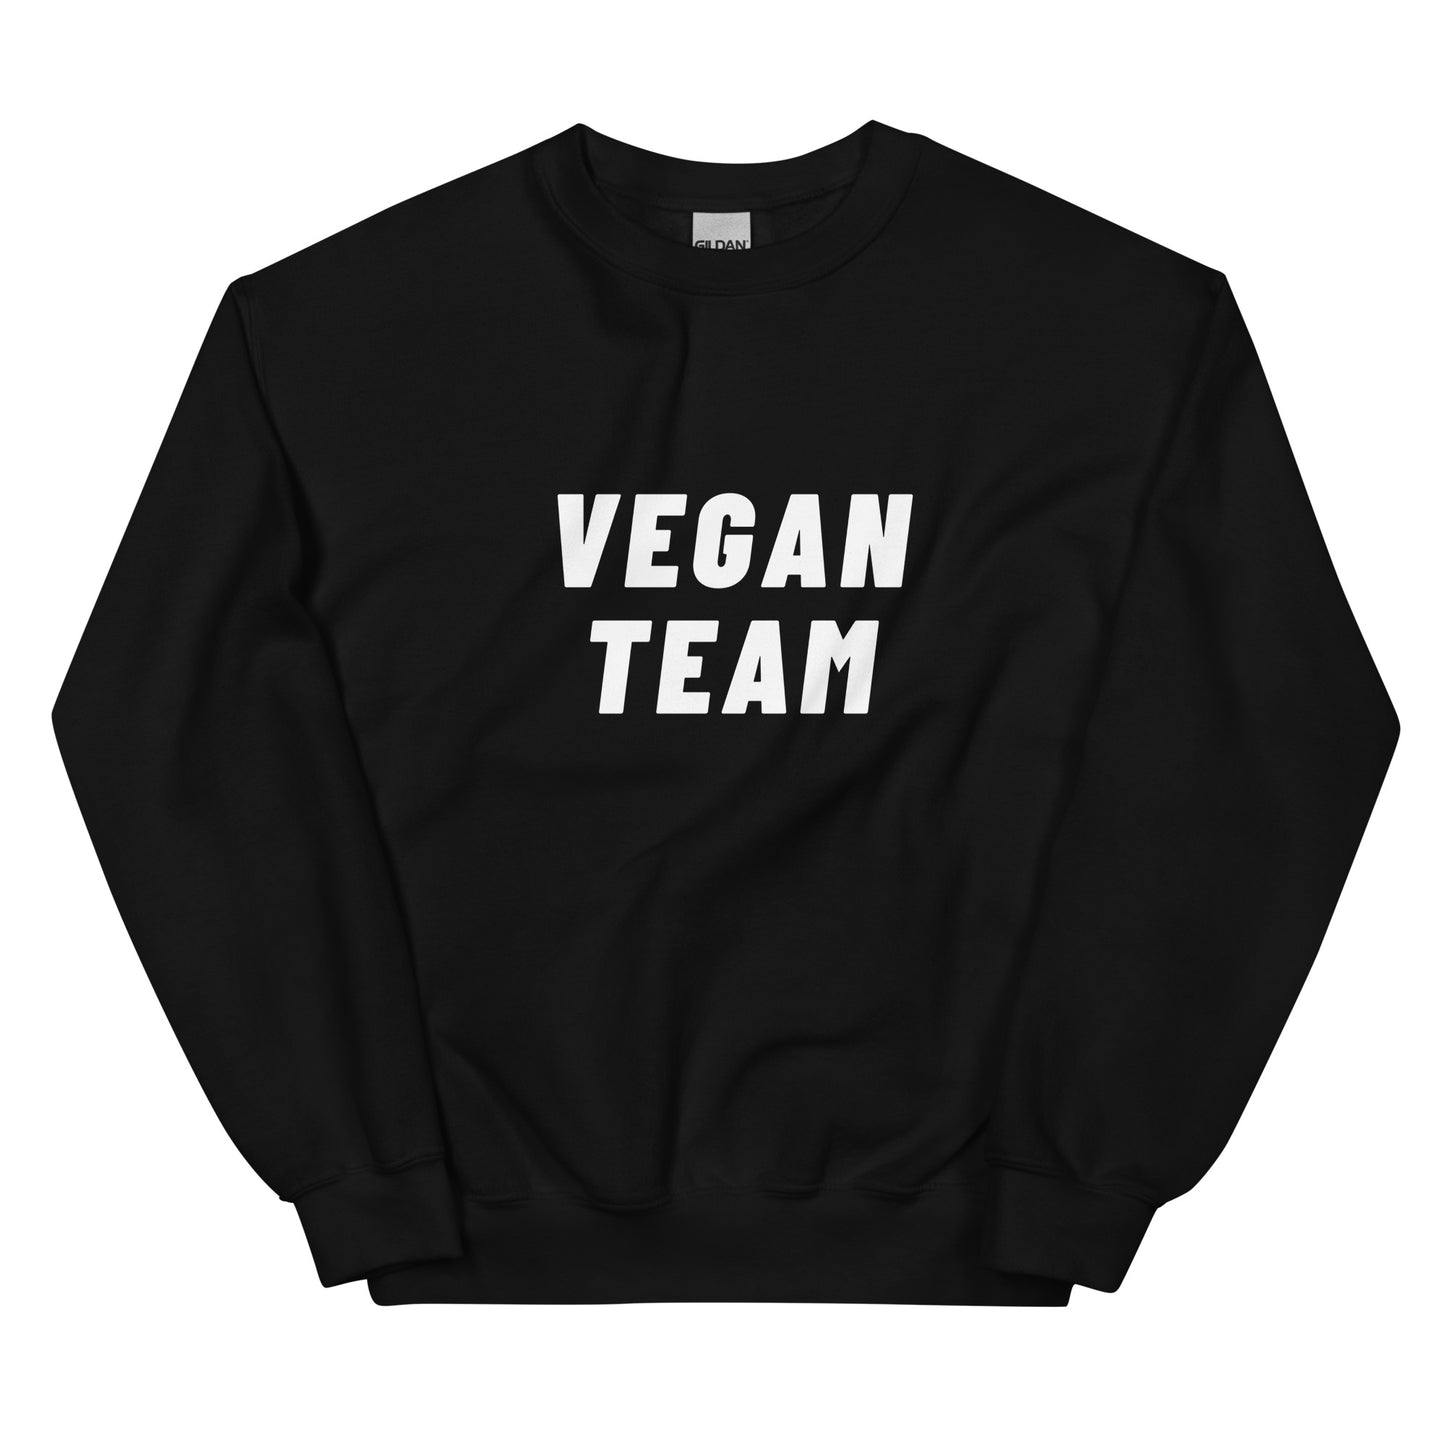 Vegan Team - Sweatshirt